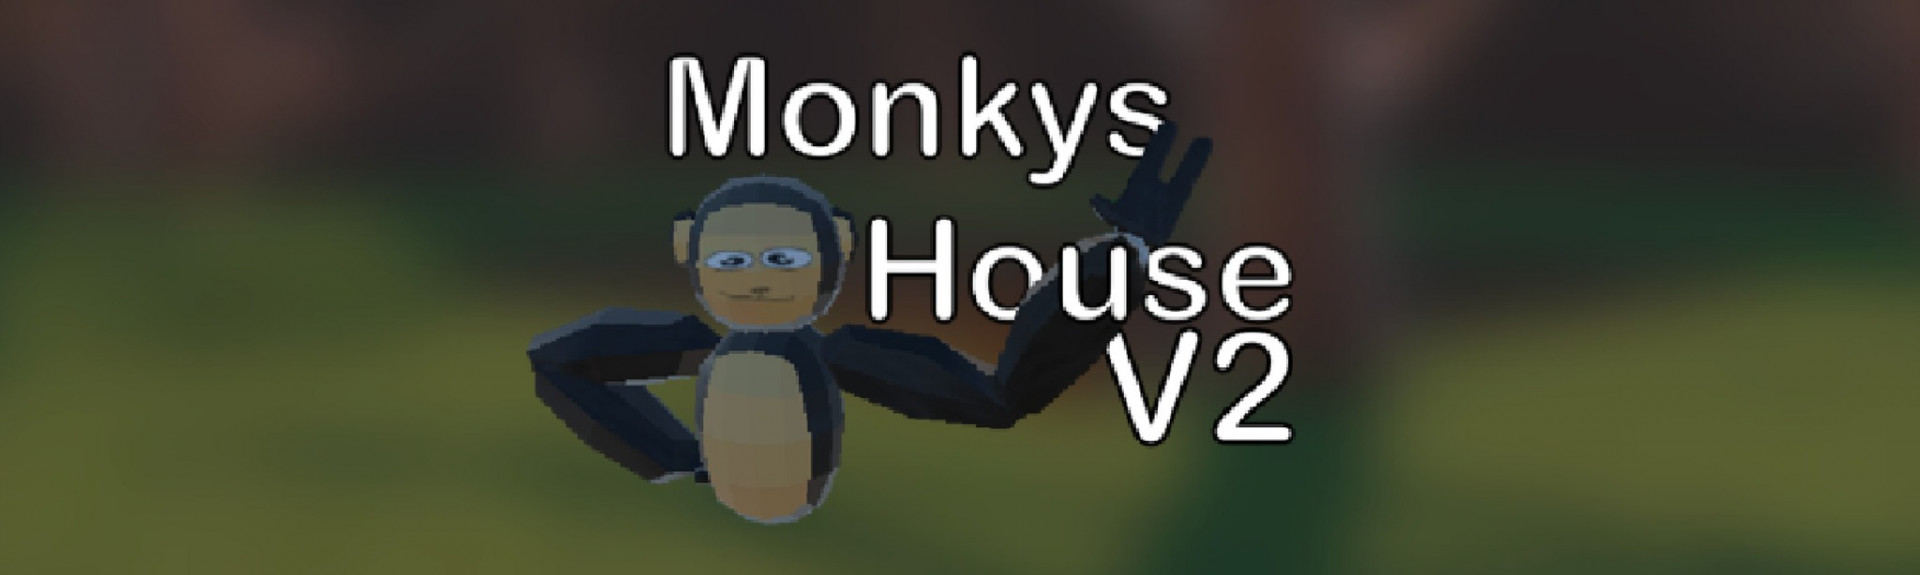 Monkys House V2